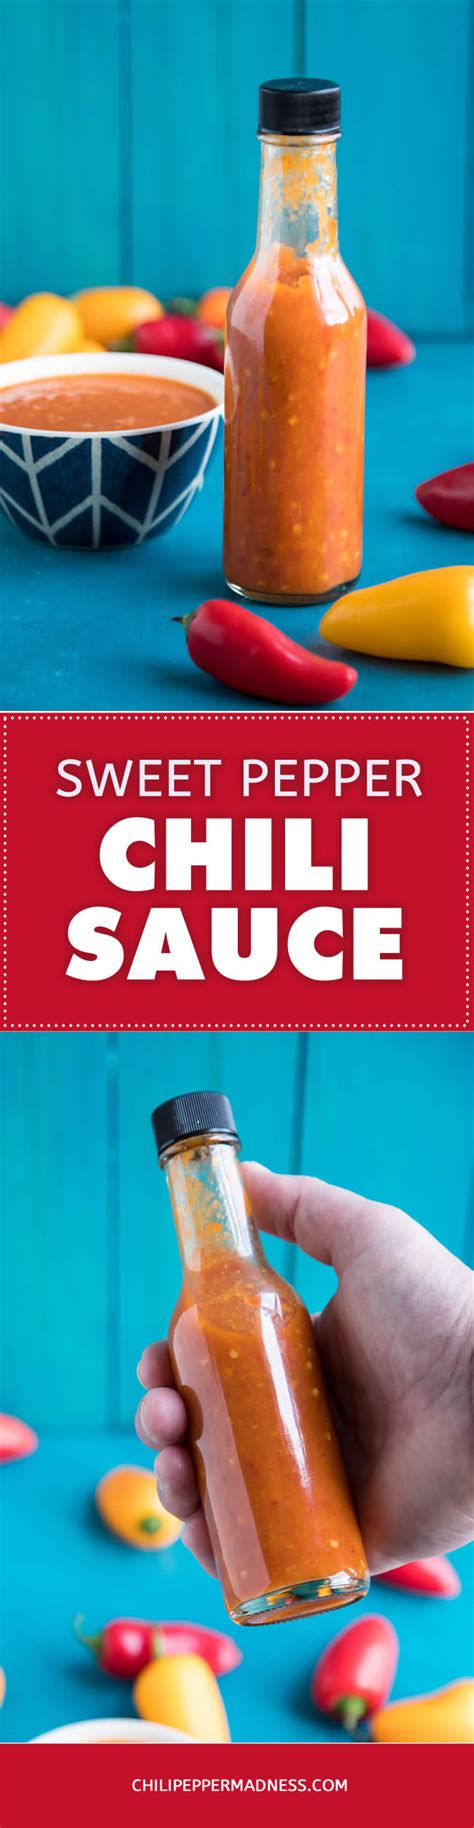 sweet pepper chili sauce recipe chili pepper madness